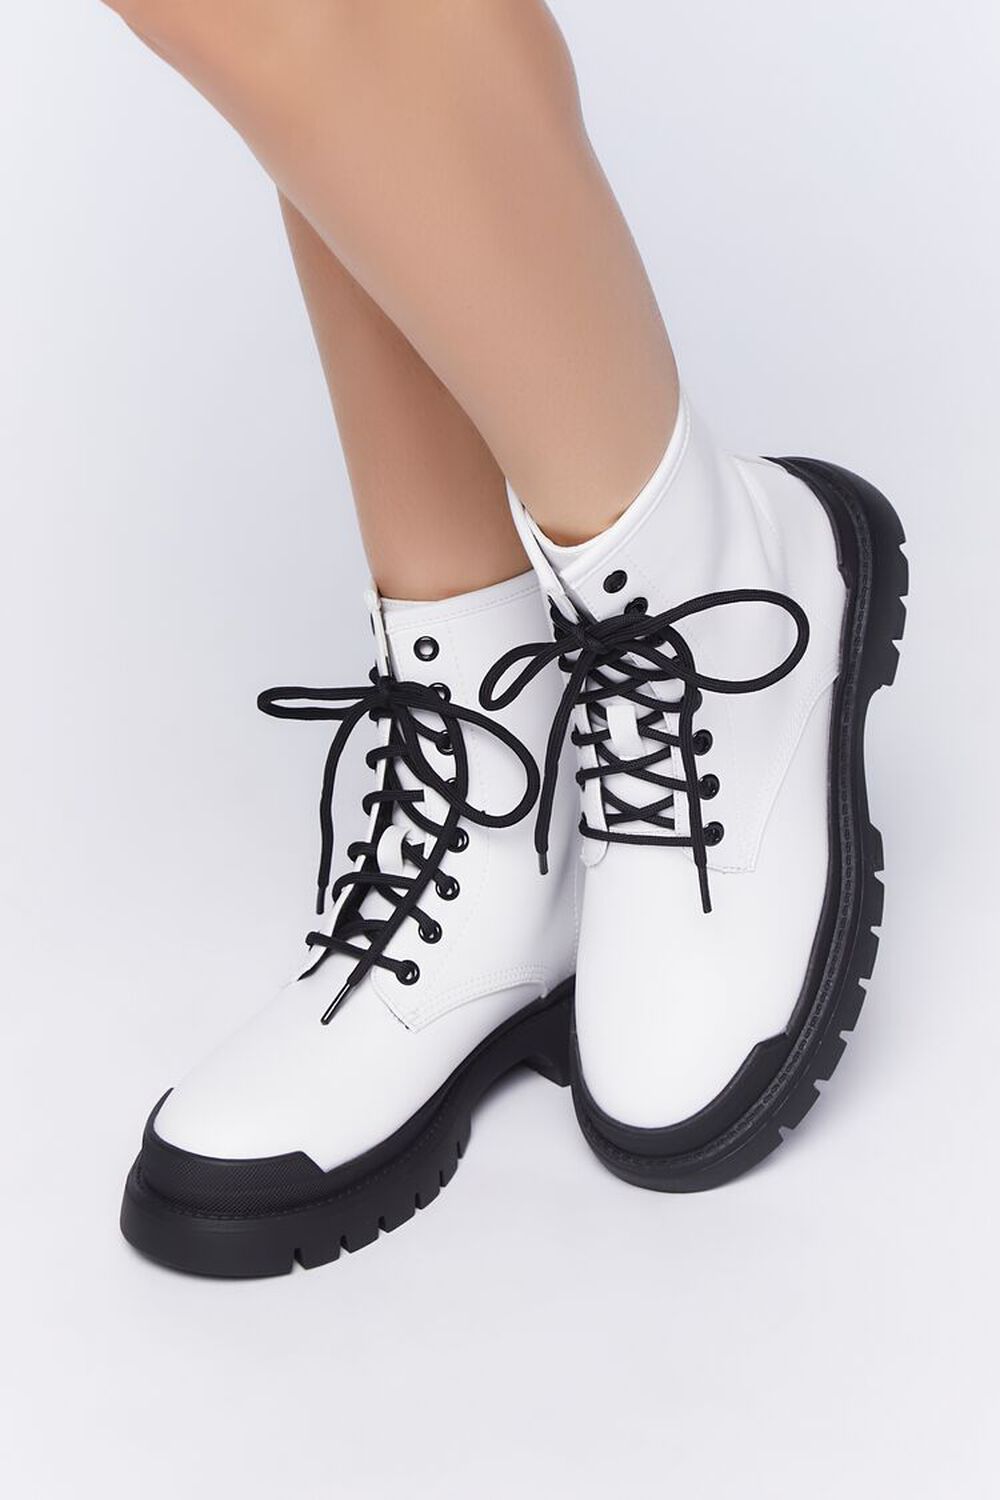 WHITE/BLACK Faux Leather Colorblock Combat Boots, image 1